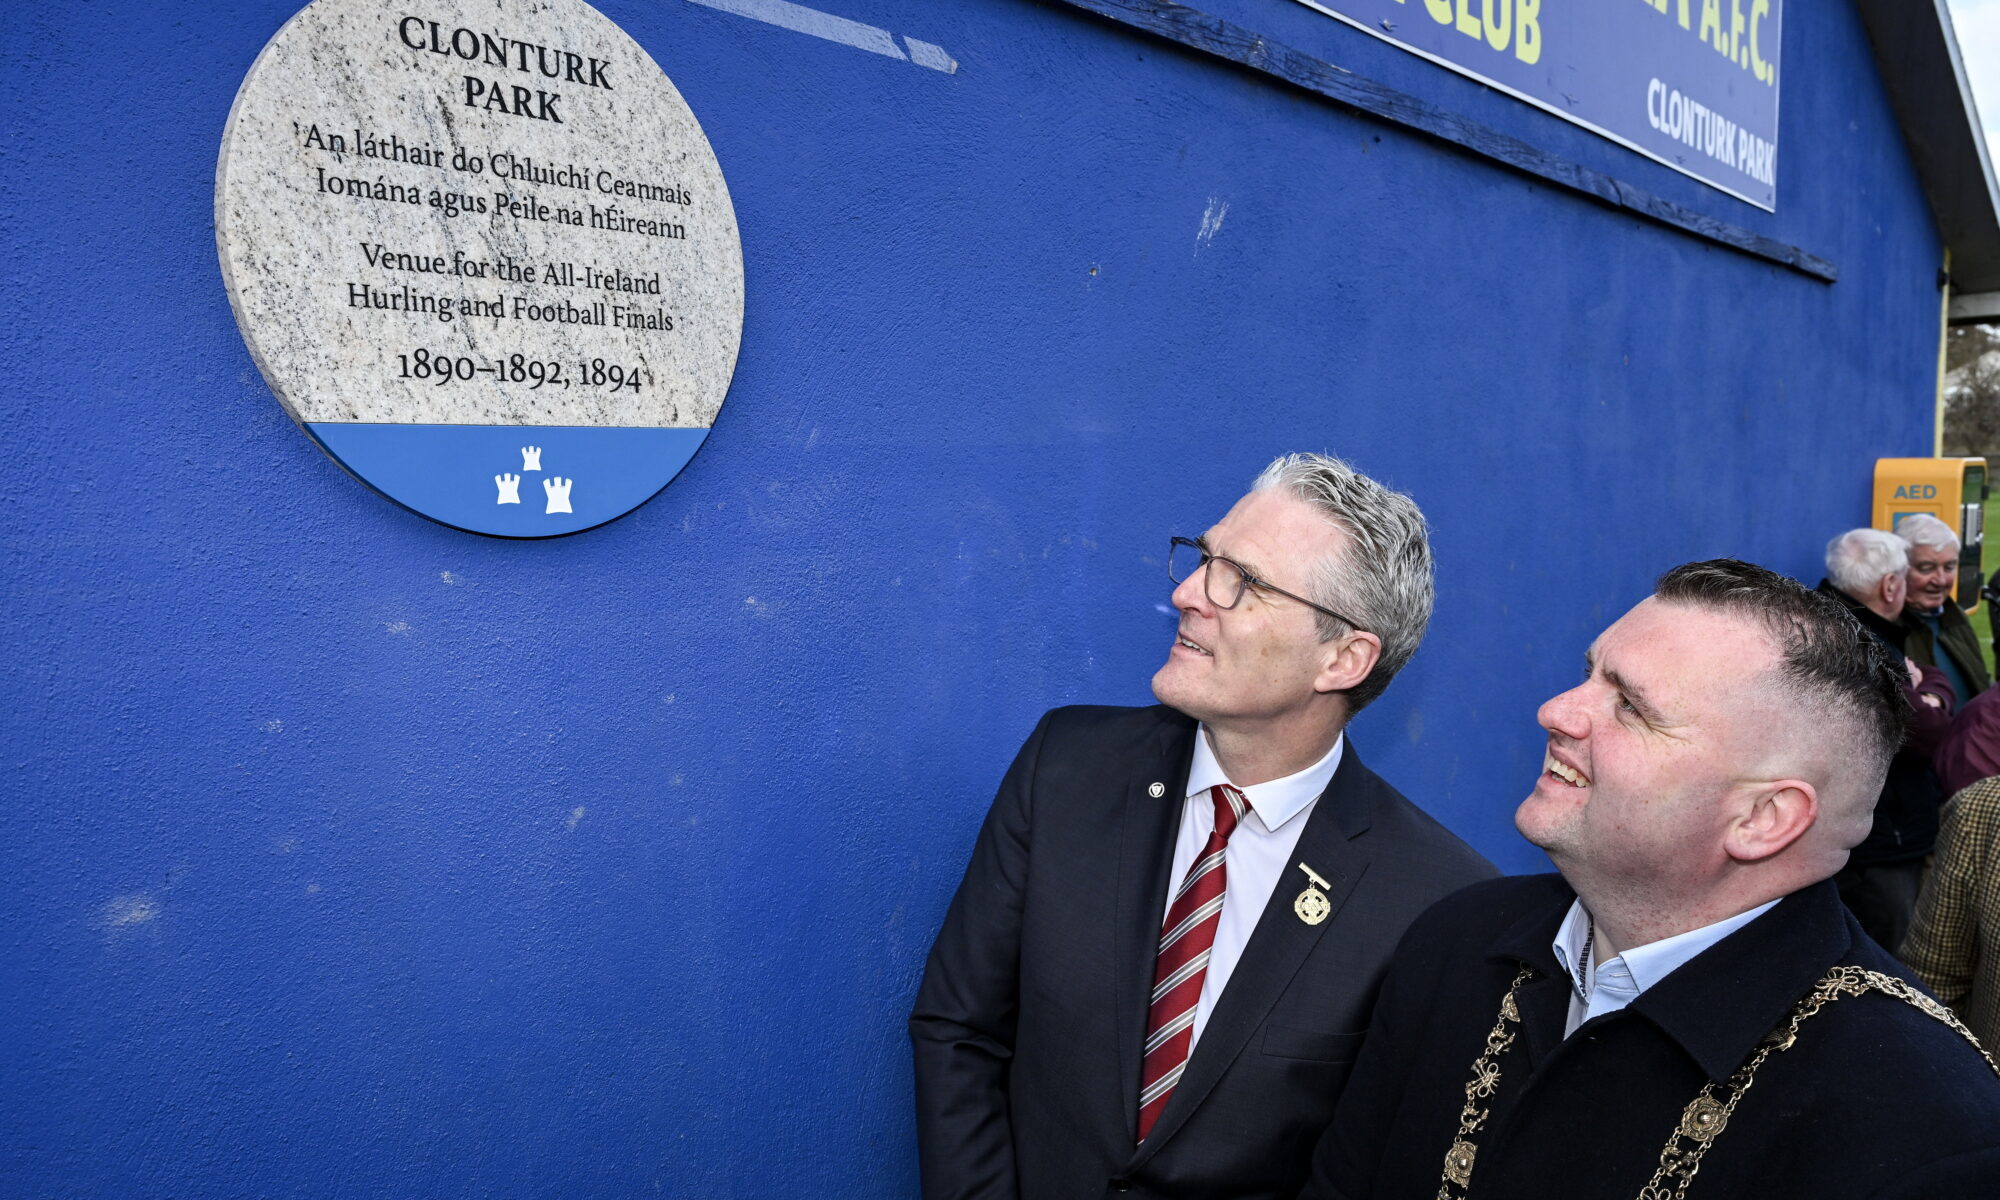 Photograph of a Dublin City Council plaque commemorating Clonturk Park as the venue for All Ireland Finals, at Richmond Road, Dublin 3.